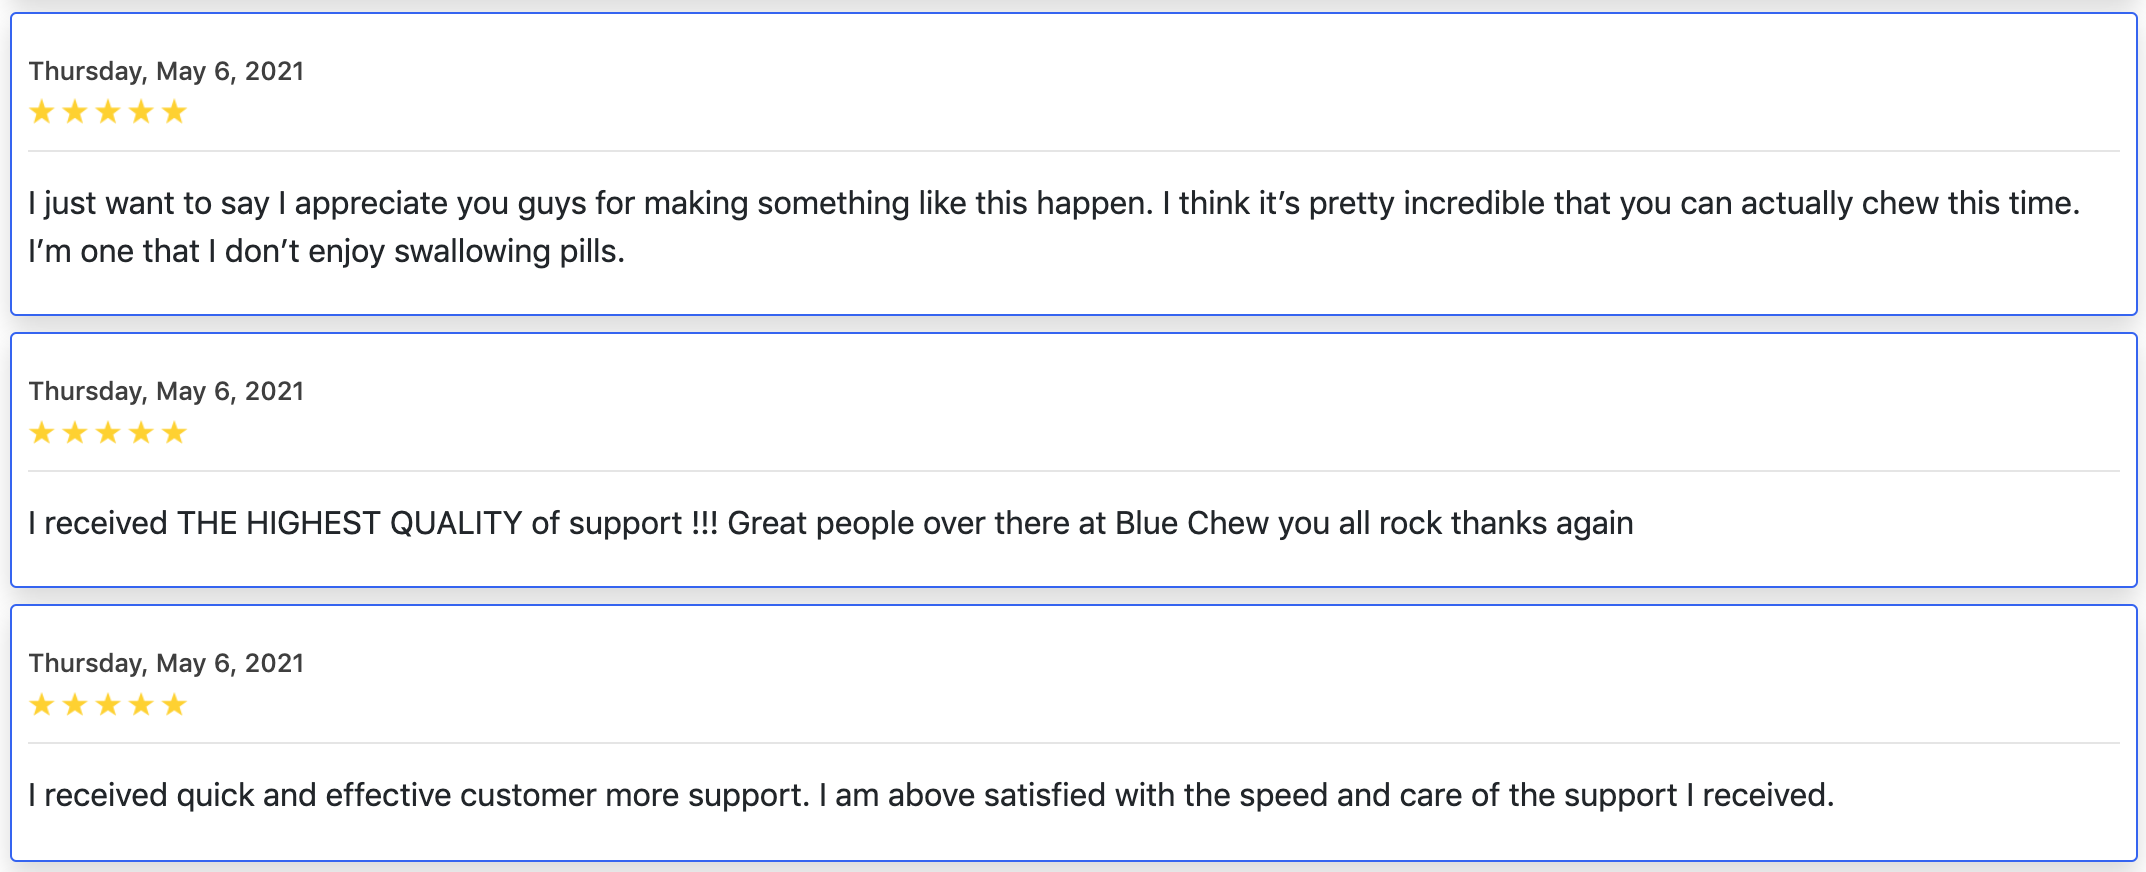 bluechew.com customer reviews from the official website